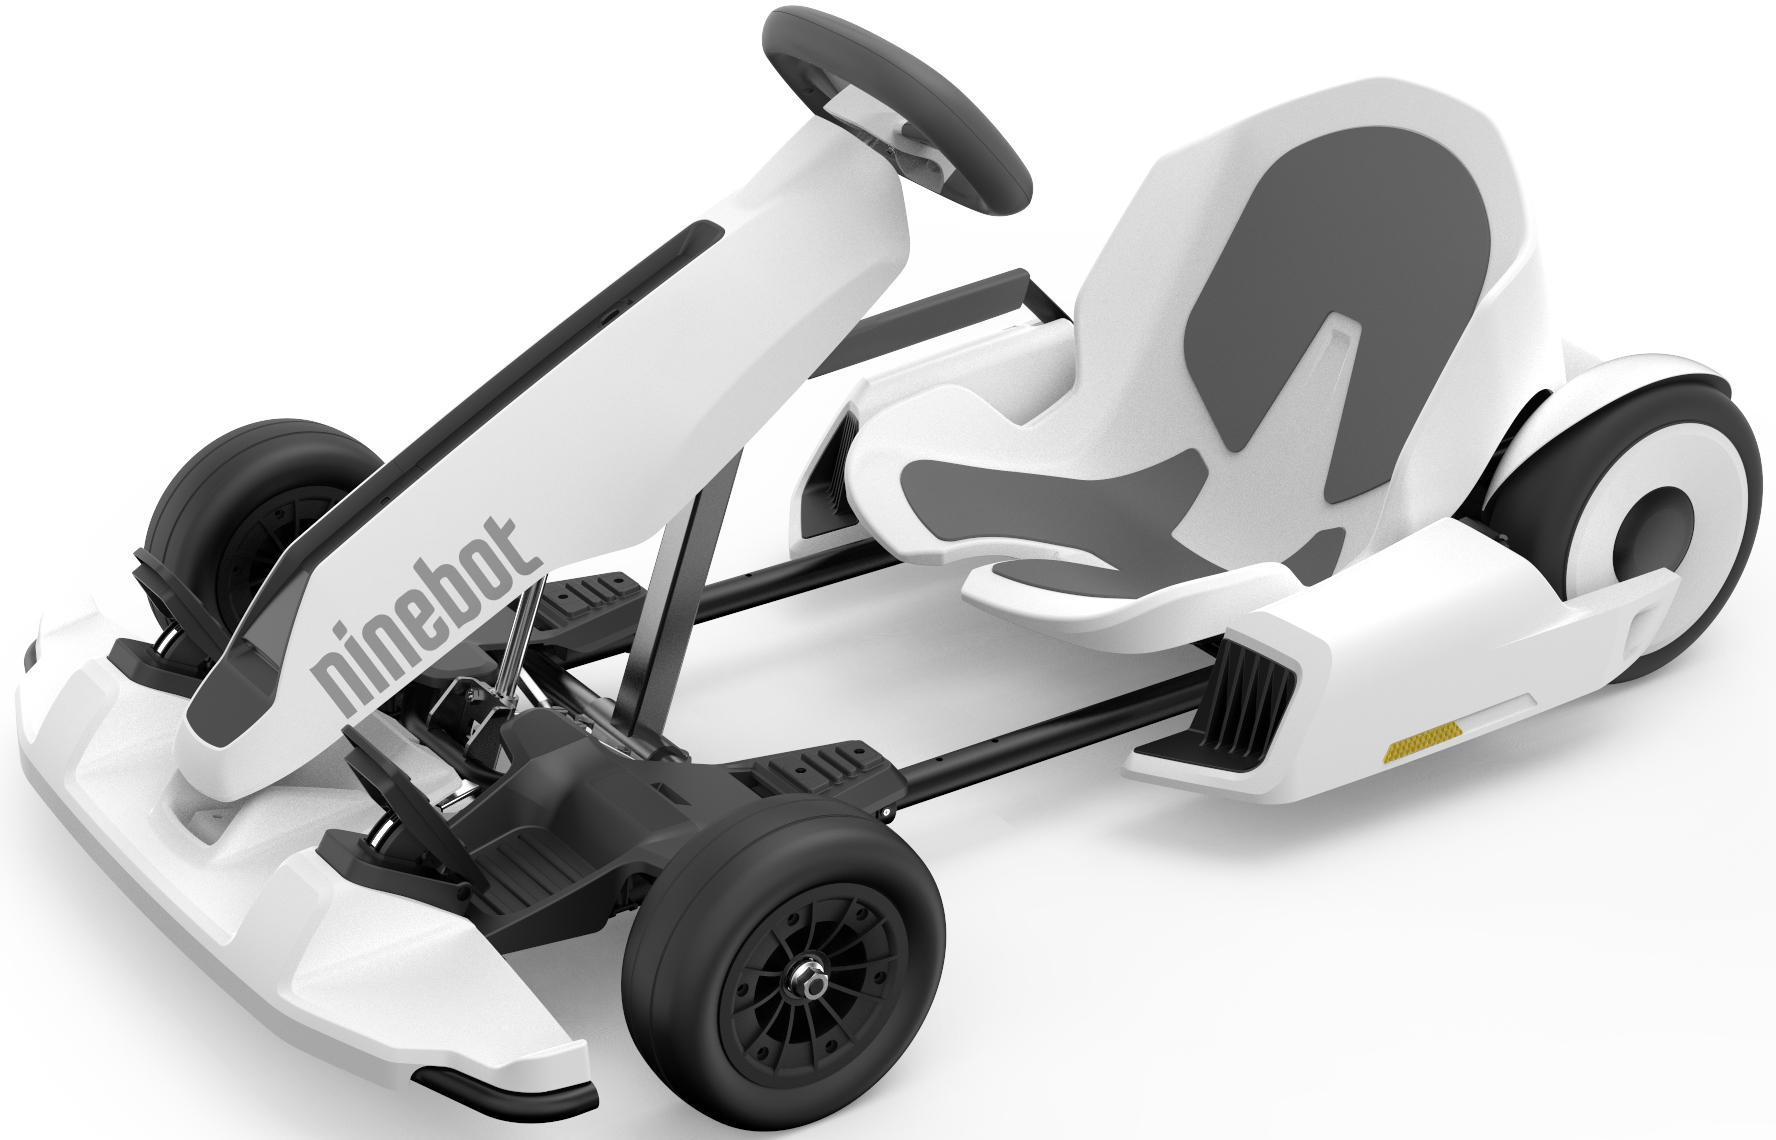 Картинг найнбот. Ninebot Gokart Kit. Машина Xiaomi Ninebot Gokart. Segway-Ninebot go Kart Kit. Электрокарт Ninebot Gokart Kit белый.